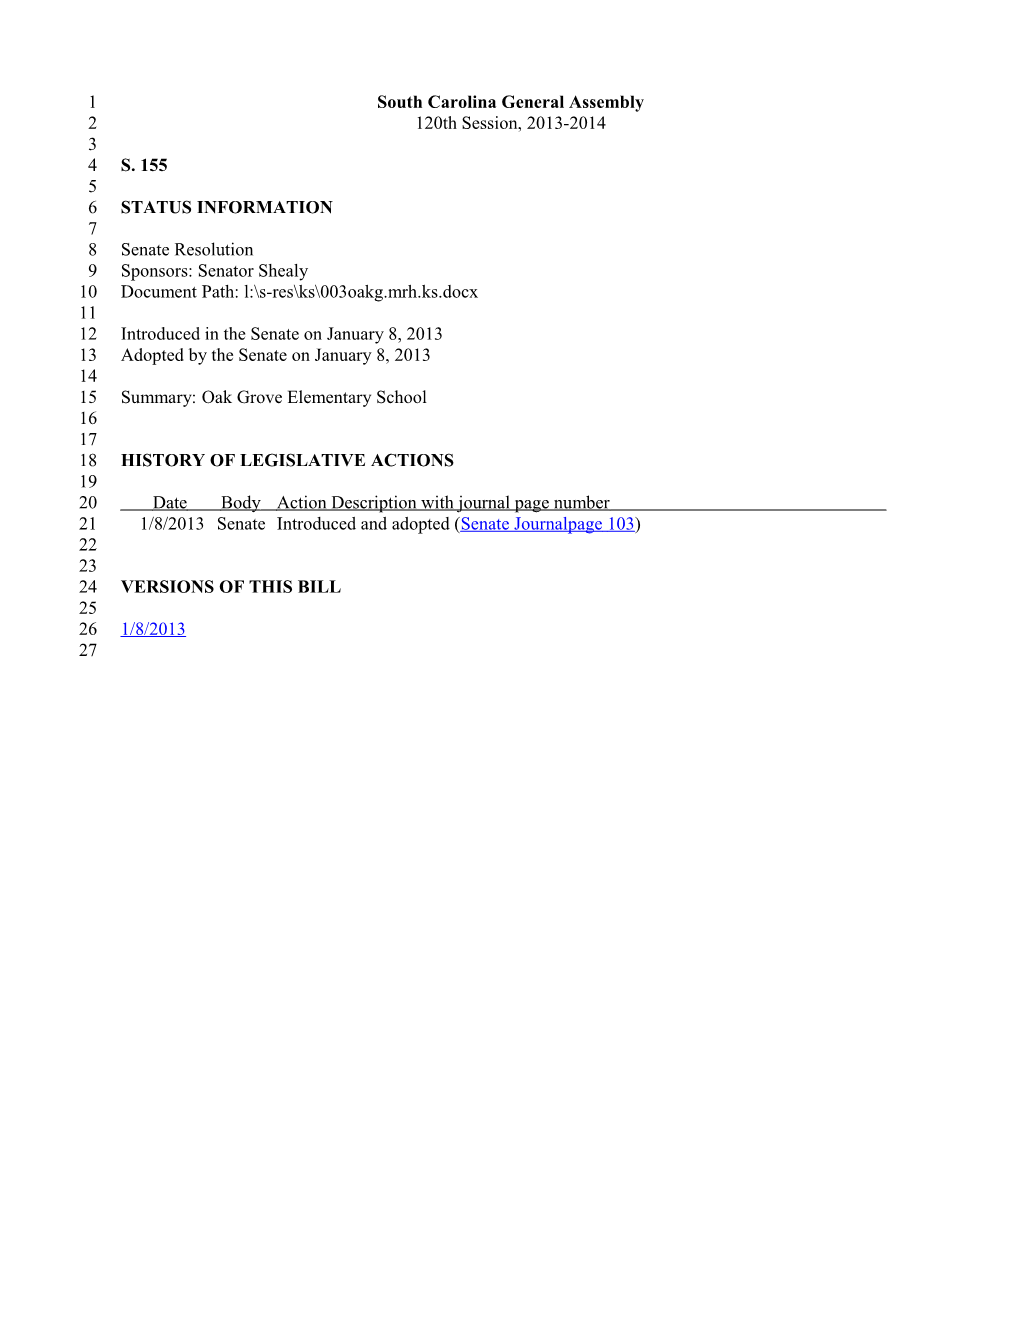 2013-2014 Bill 155: Oak Grove Elementary School - South Carolina Legislature Online